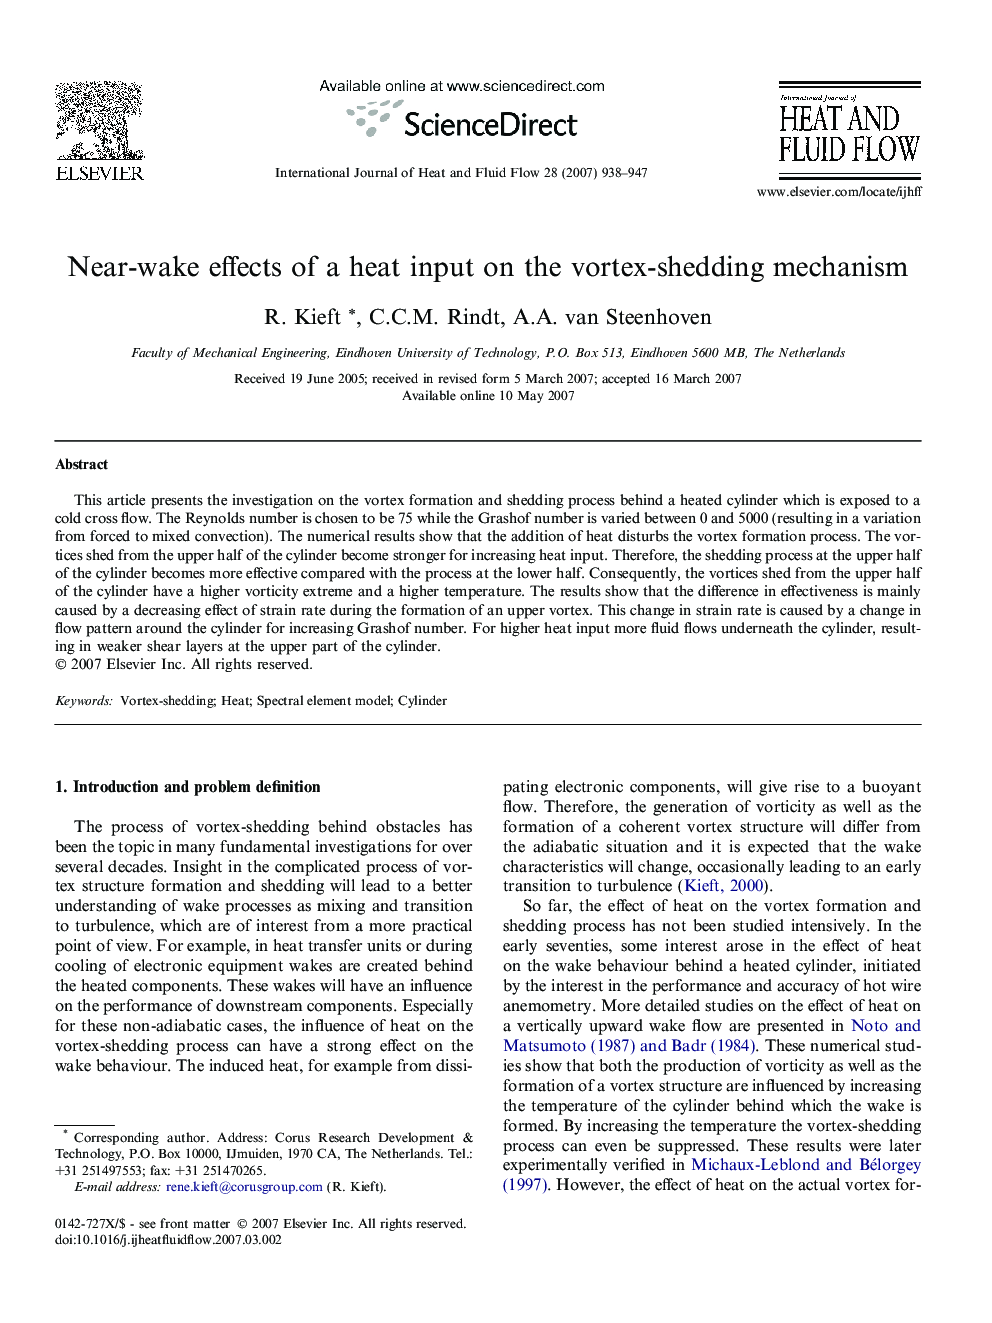 Near-wake effects of a heat input on the vortex-shedding mechanism